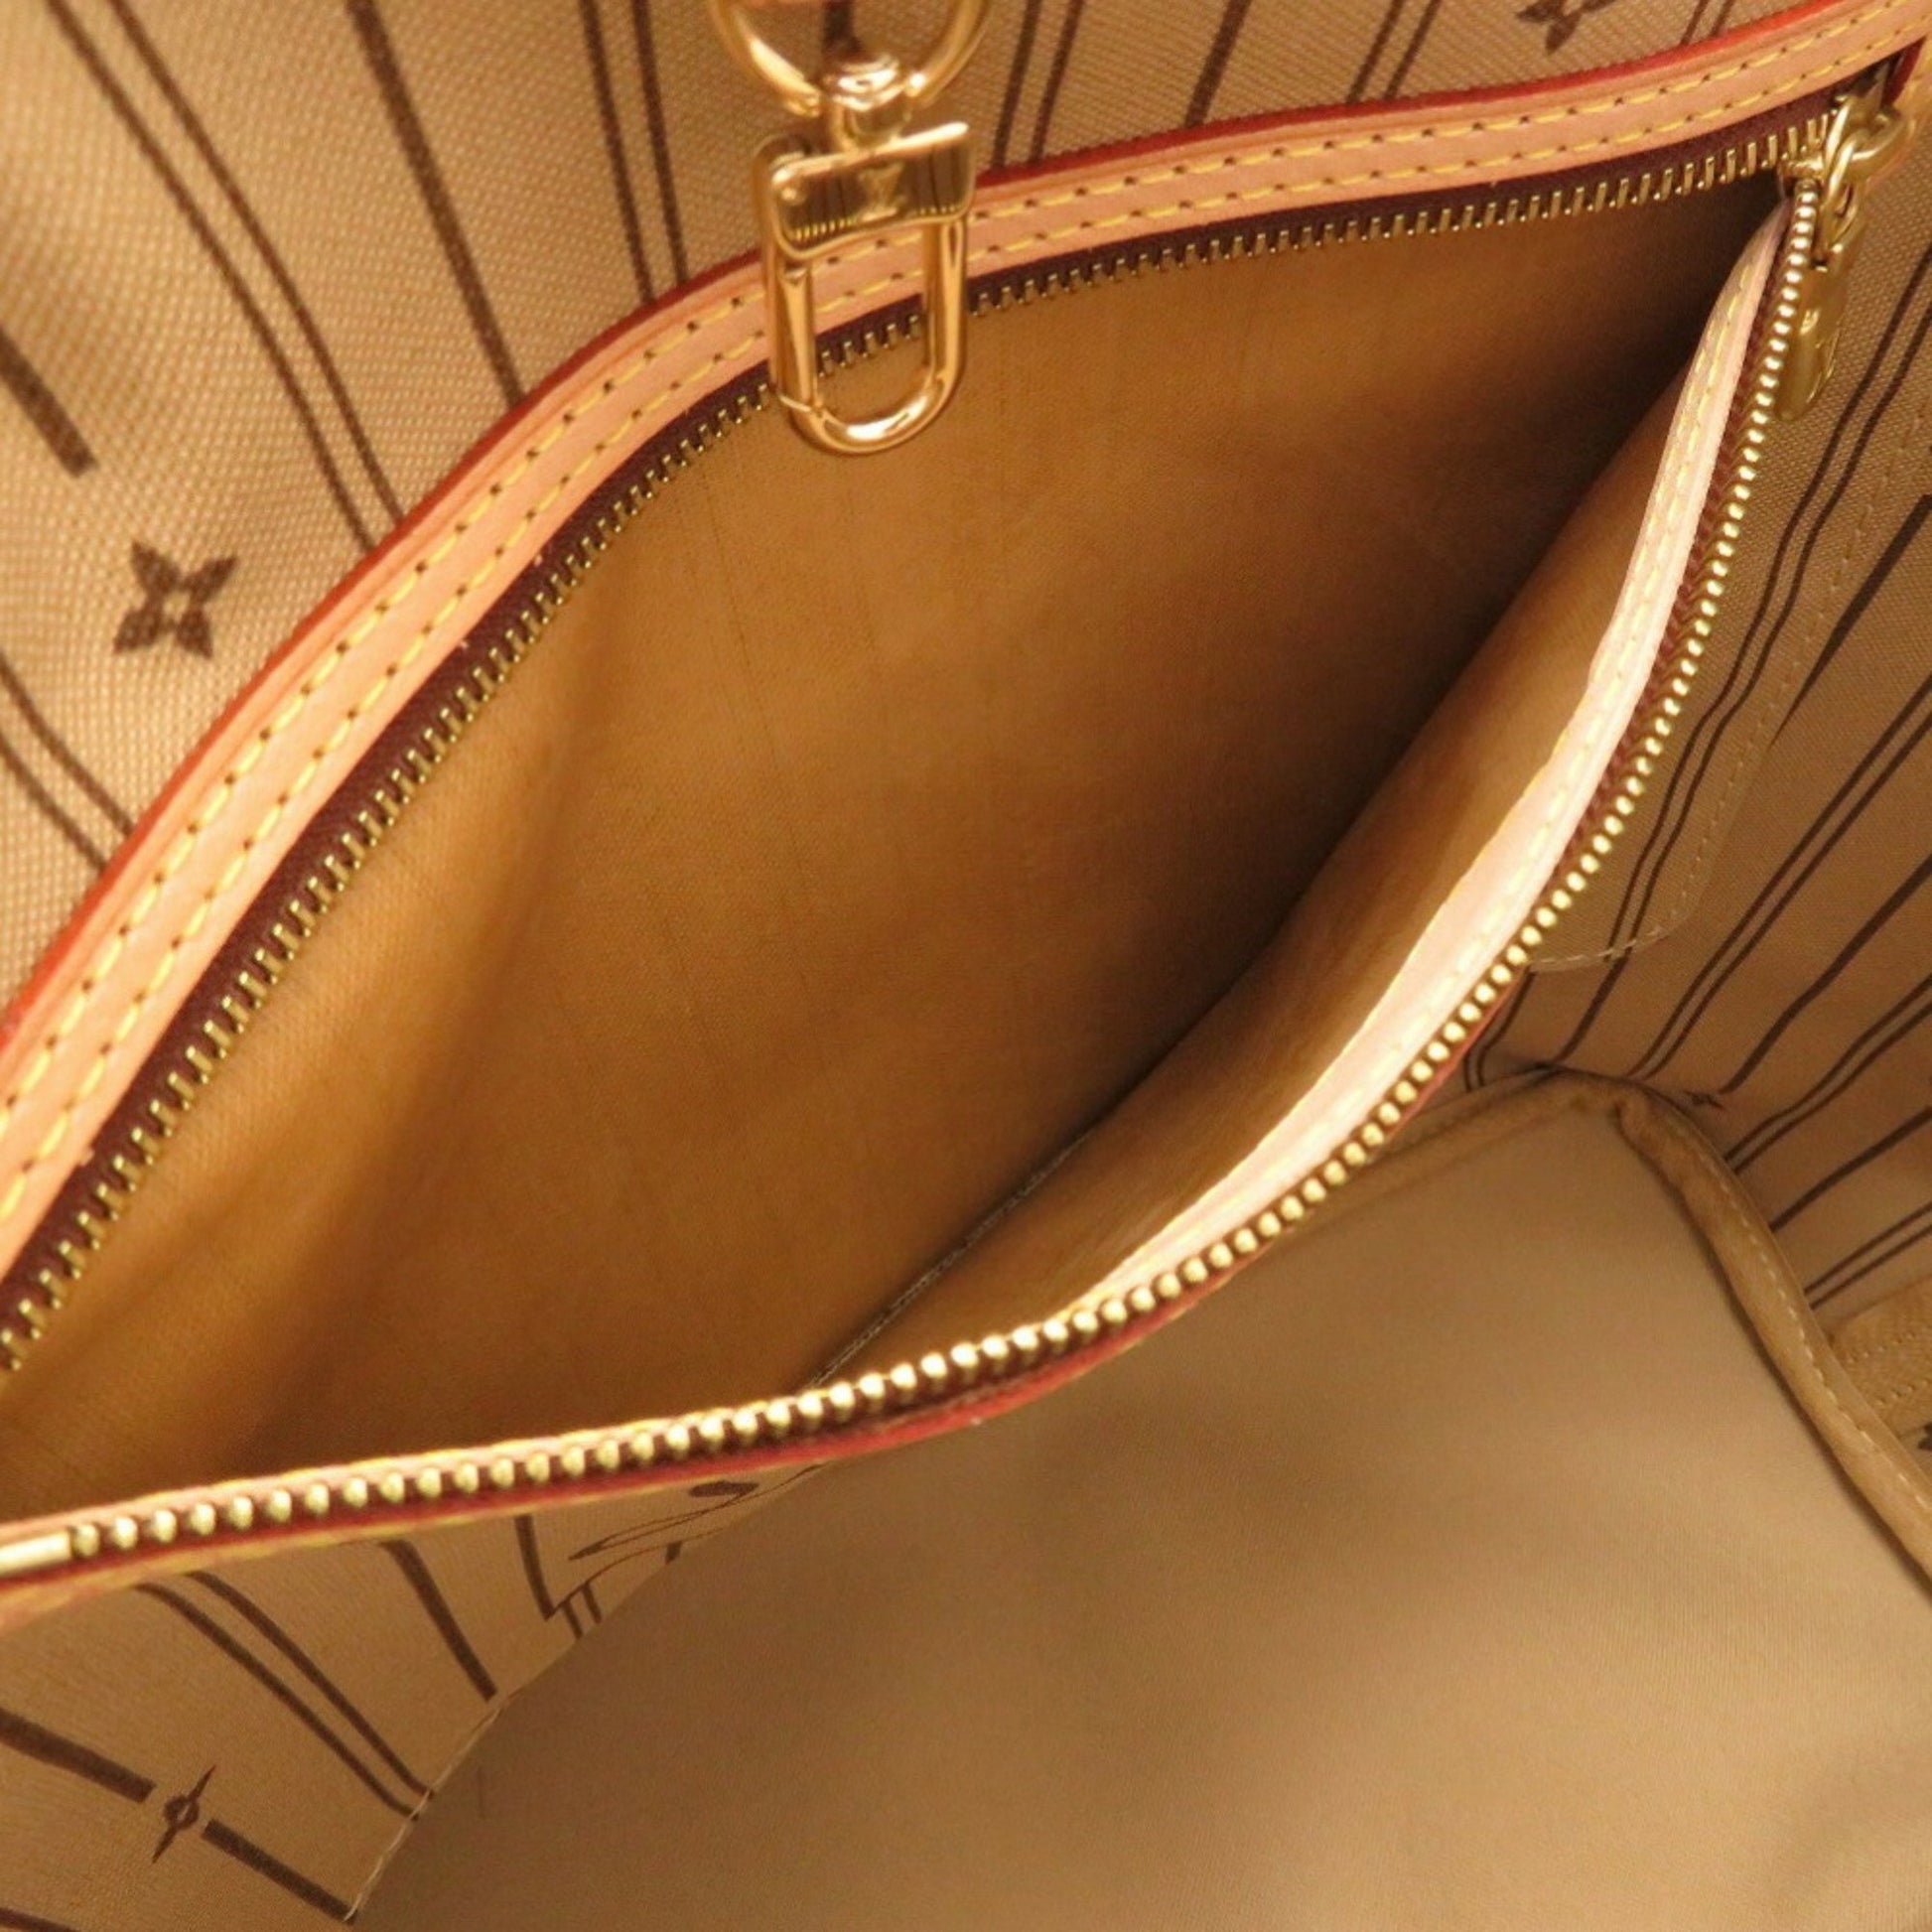 LV new style women handbag M40156 size:32X29X7cm G4 whatsapp:+8615503787453